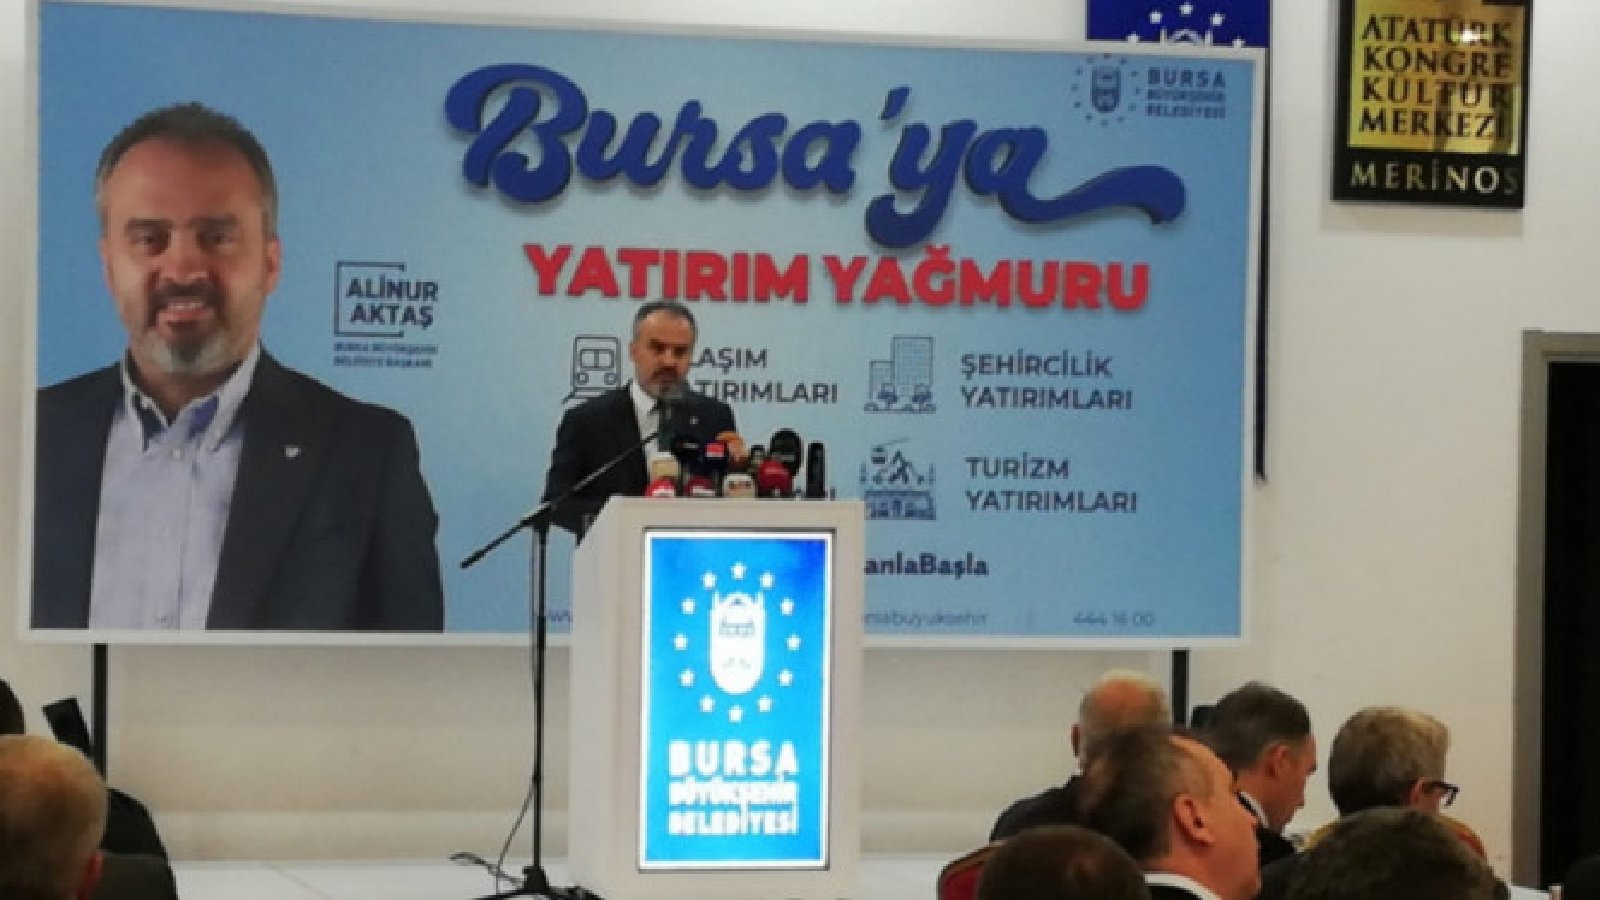 Ankara'dan Bursa için 2 talimat!